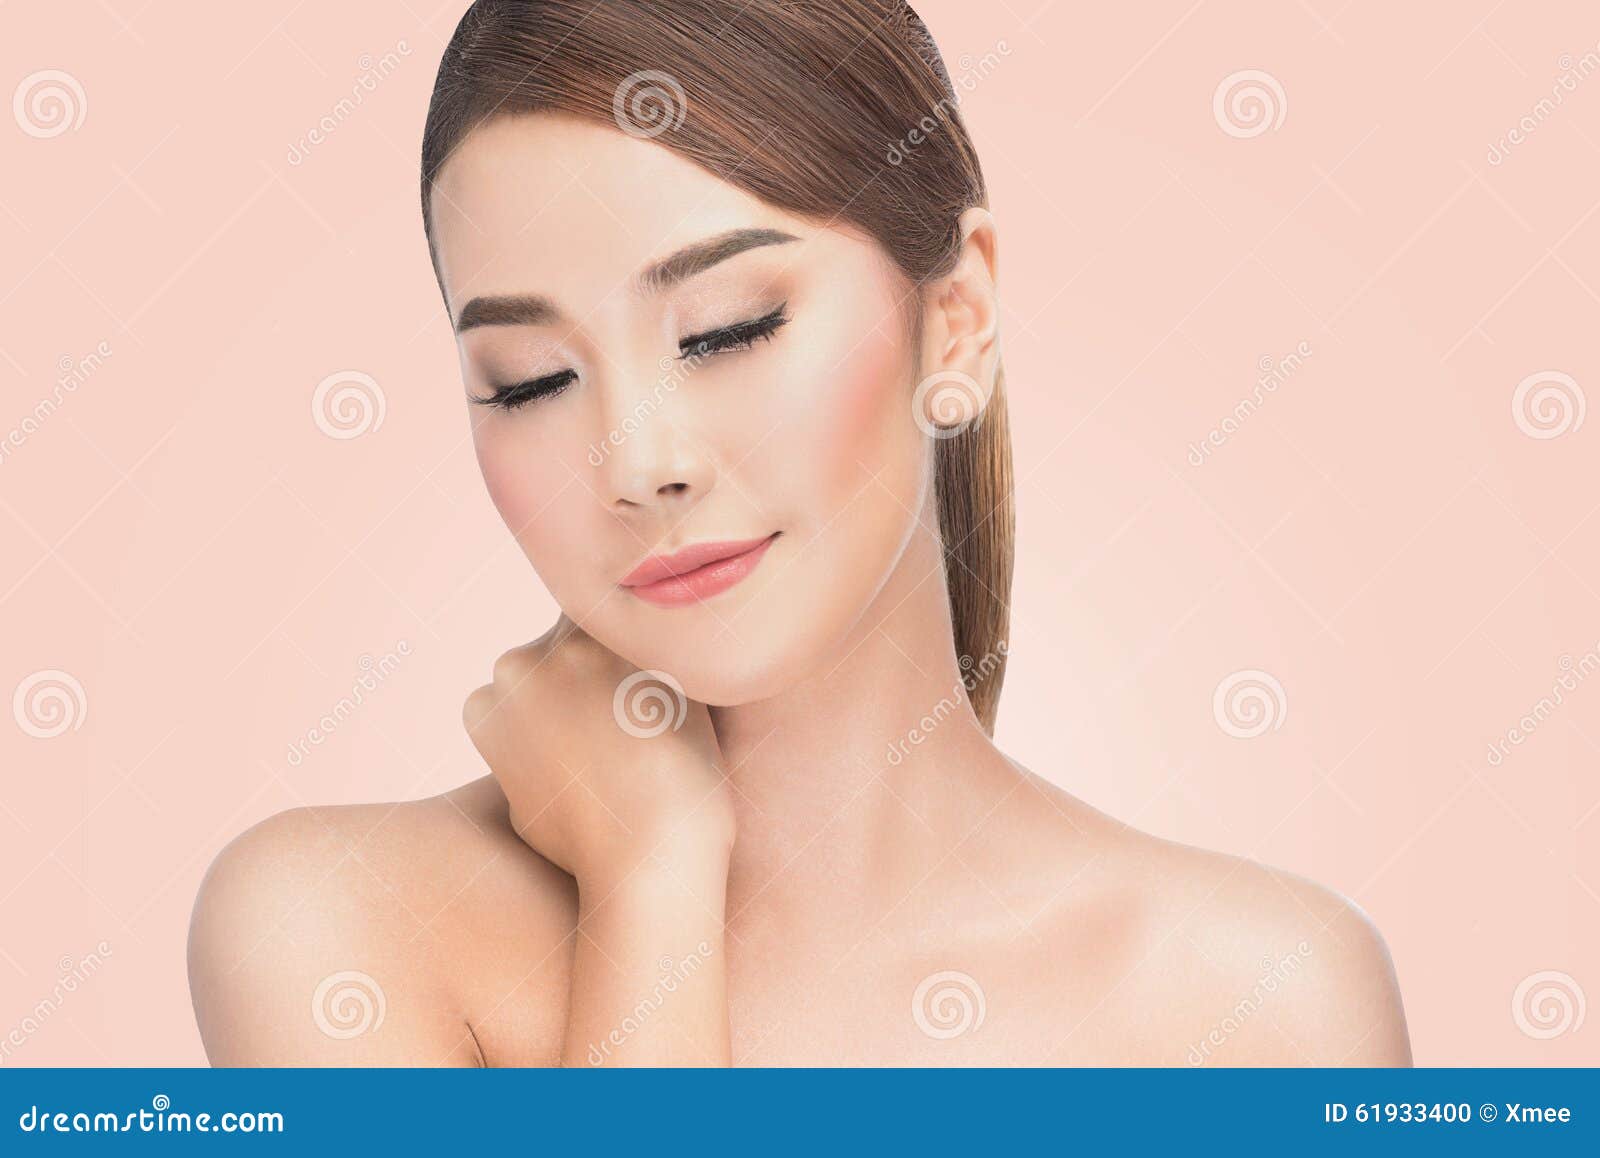 Beautifu Asian Woman At Spa Portrait Of Beautiful Female With Closed Eyes Of Pleasure Natural